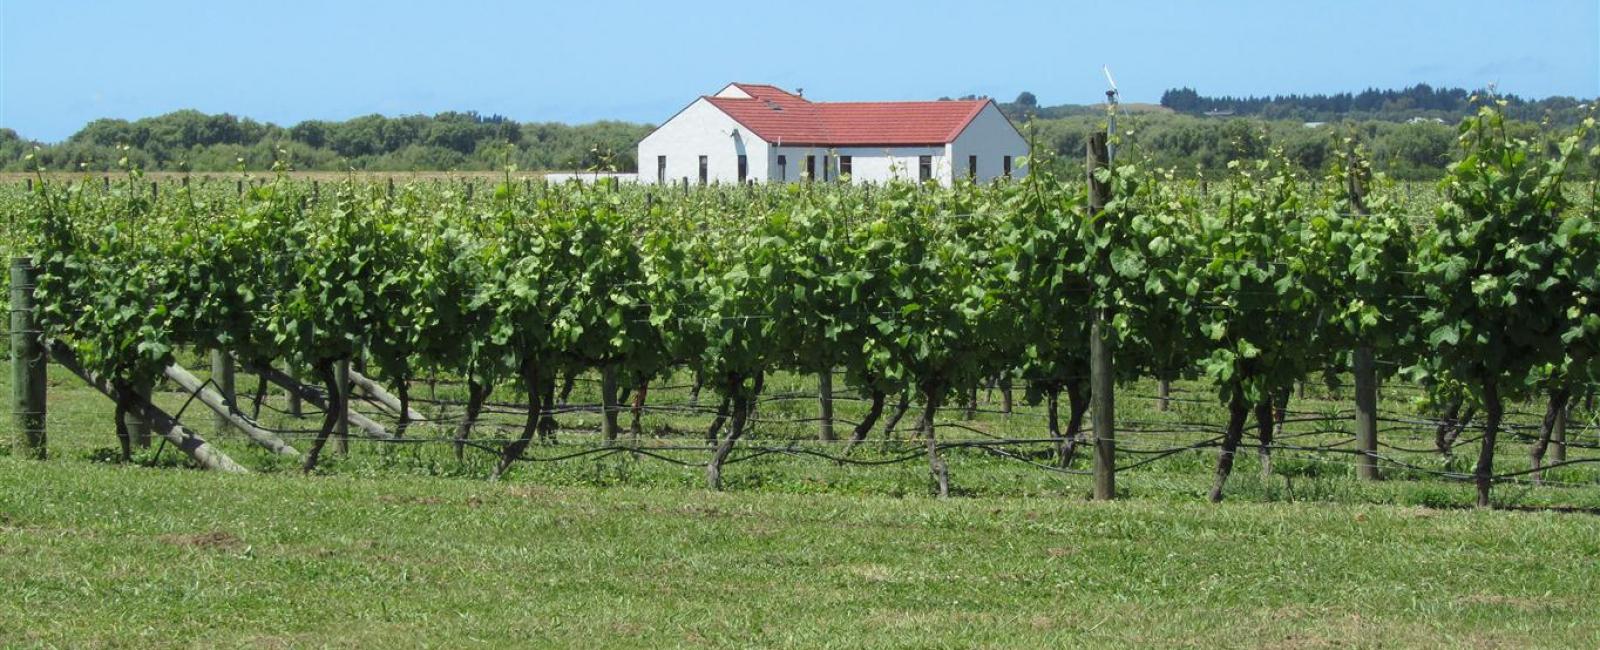 Askerne Winery